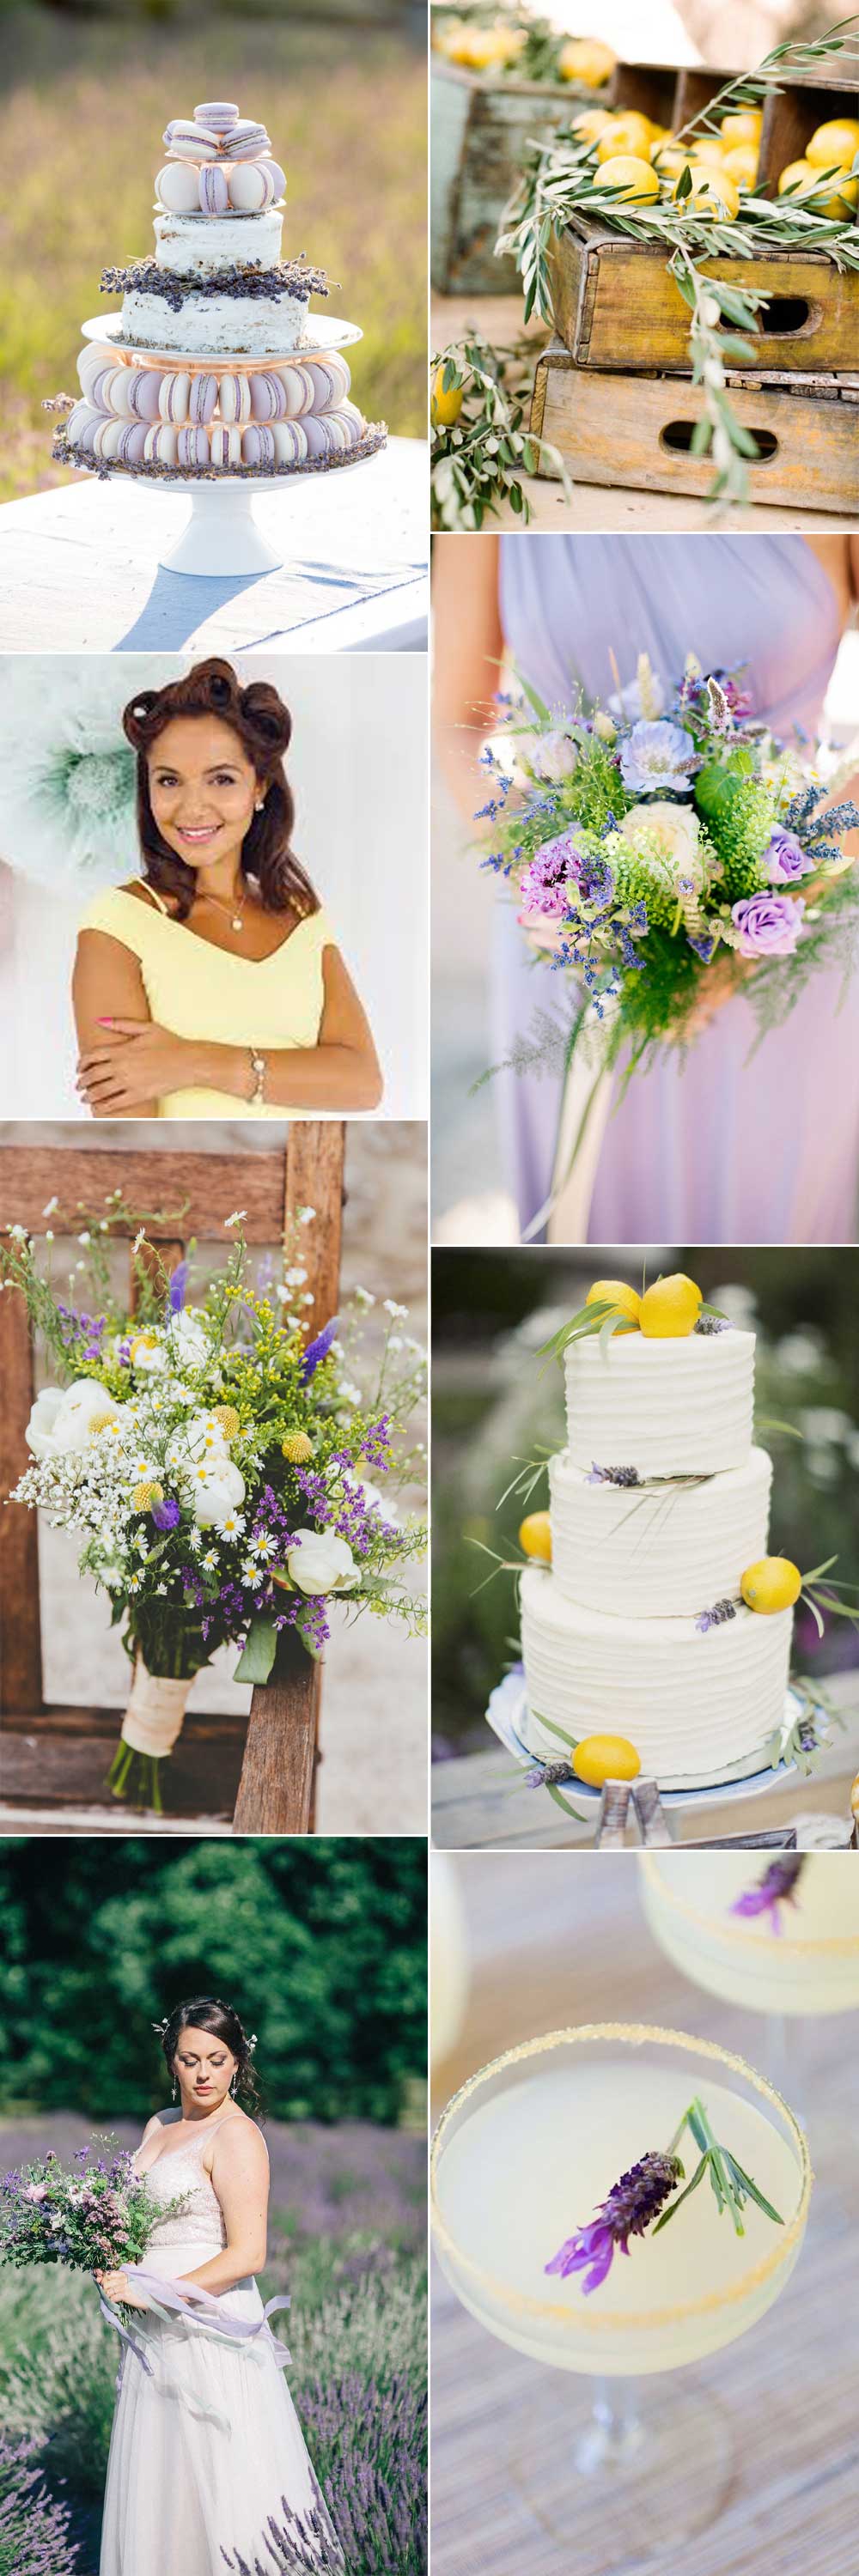 Pretty lemon and lavender wedding ideas